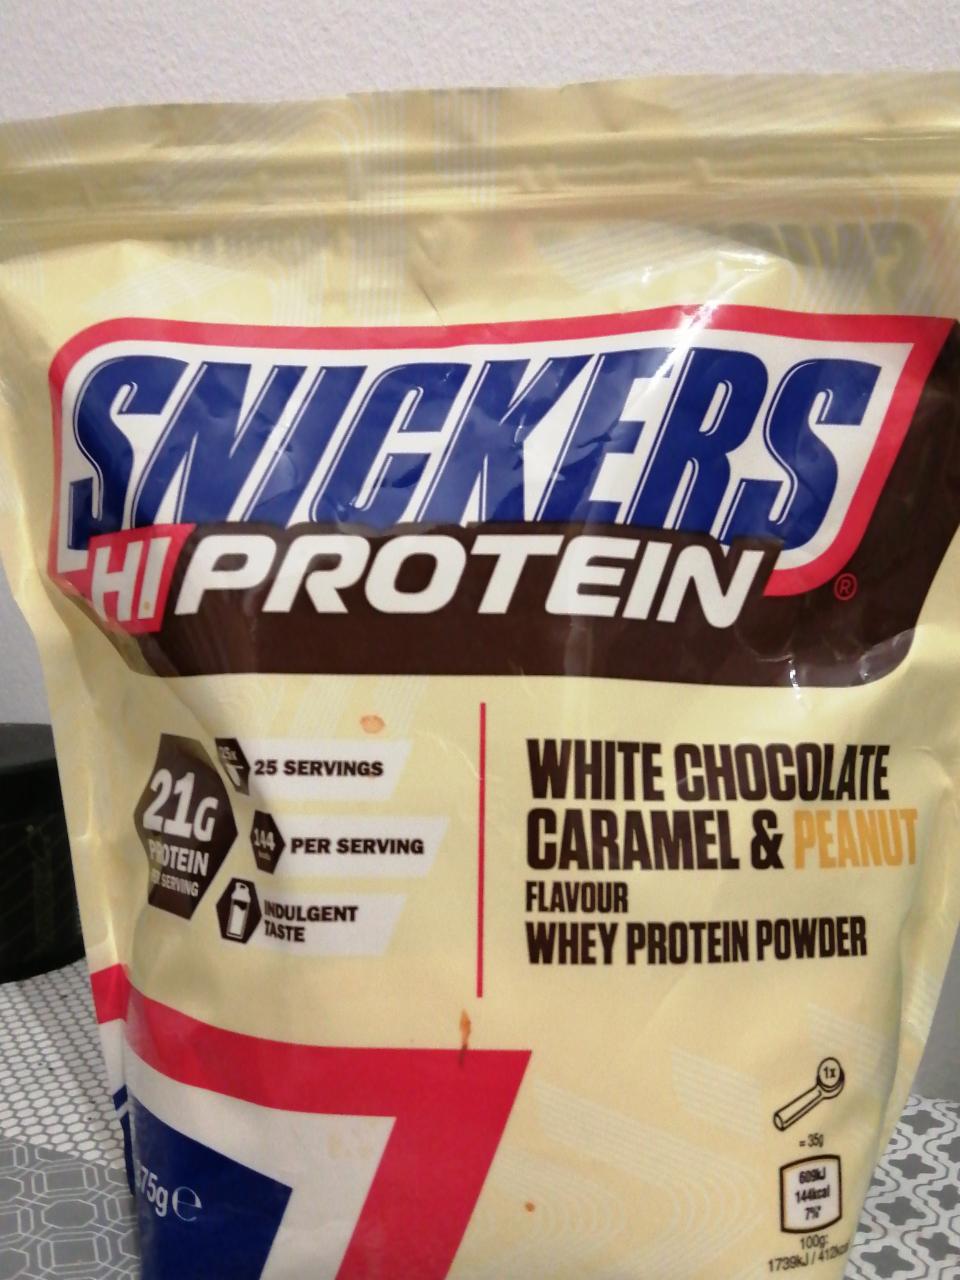 Zdjęcia - Snickers HiProtein white chocolate caramel & peanut flavour whey protein powder